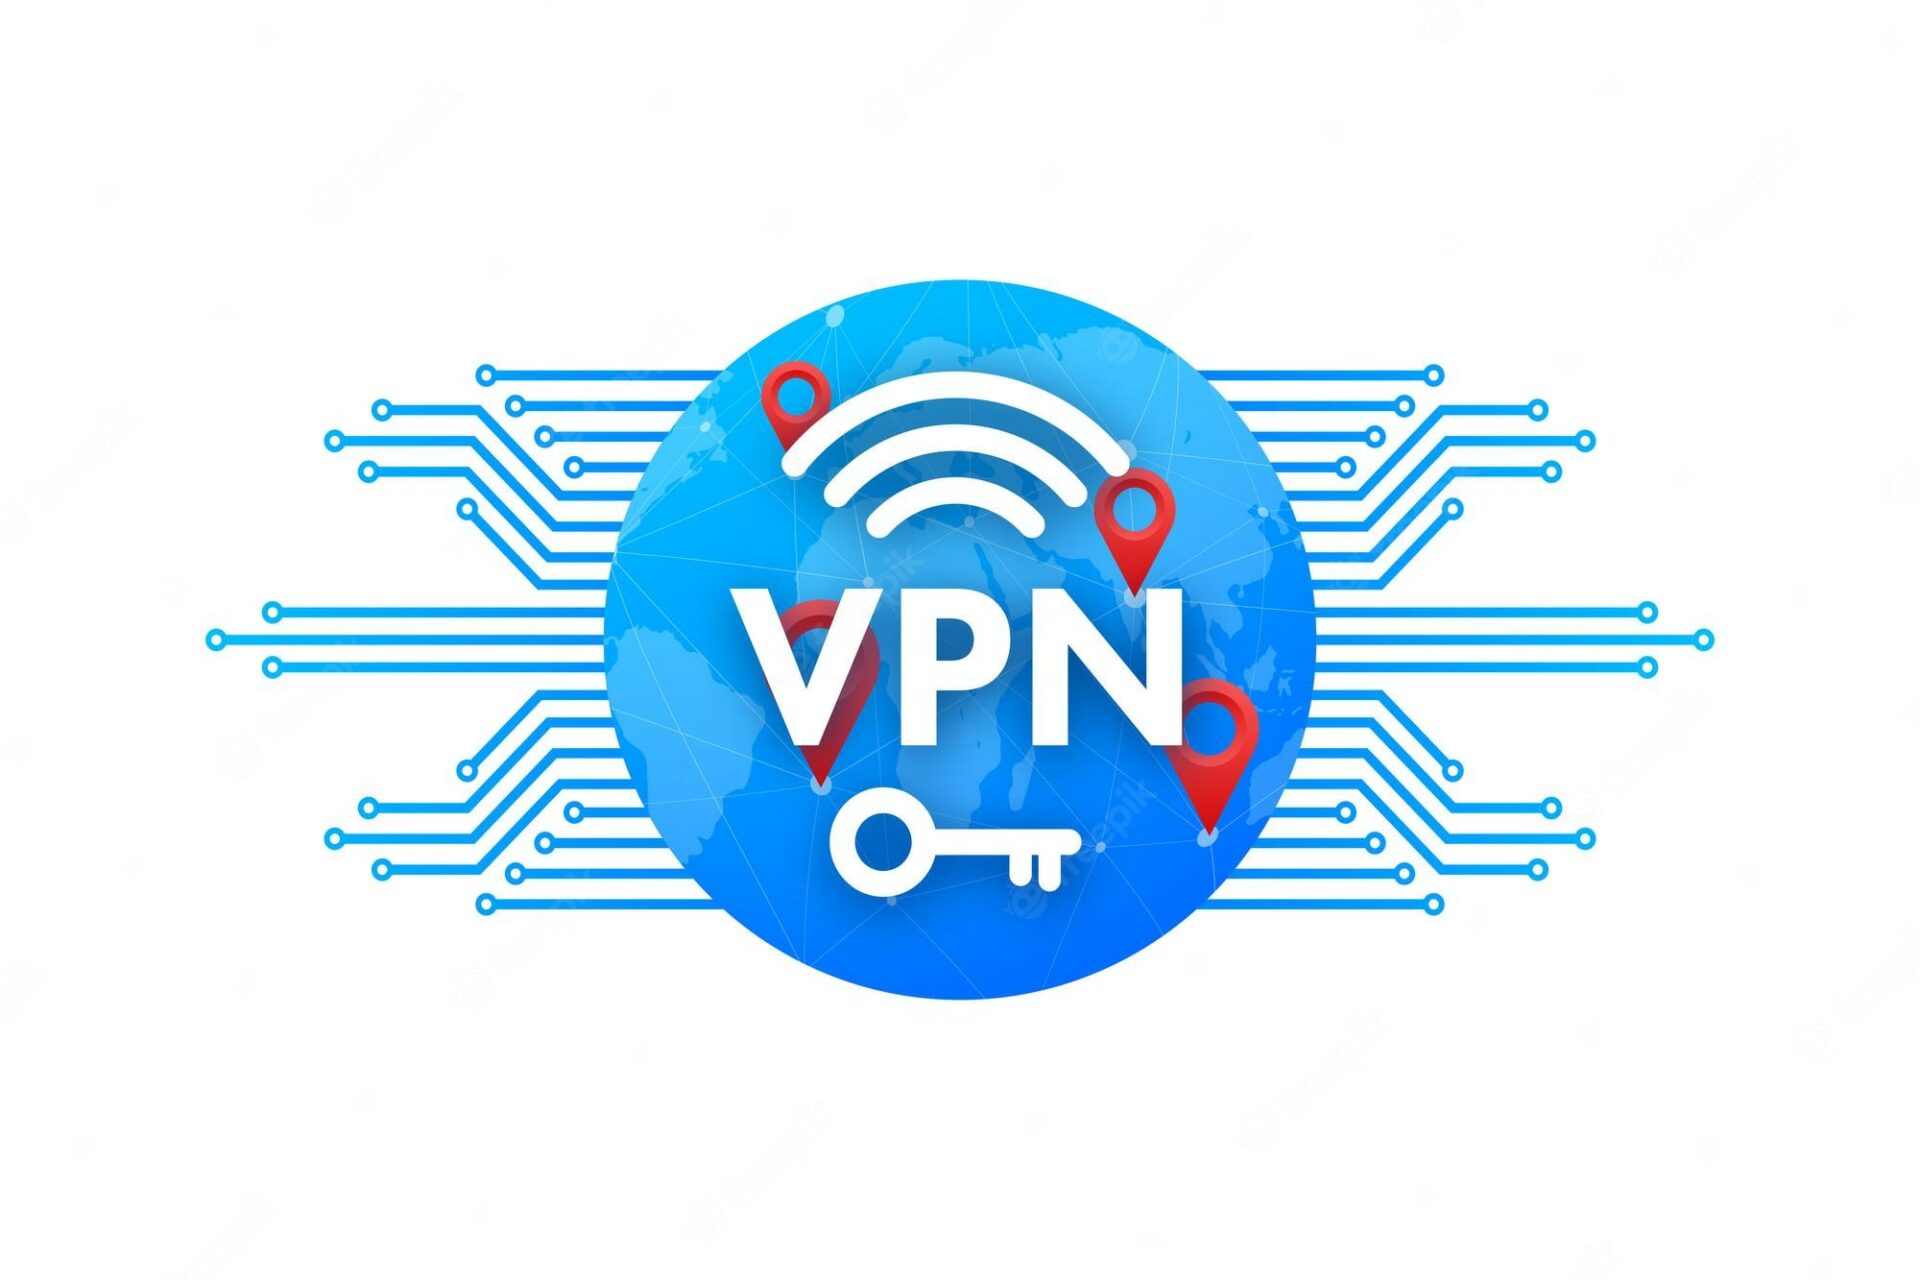 VPN usage